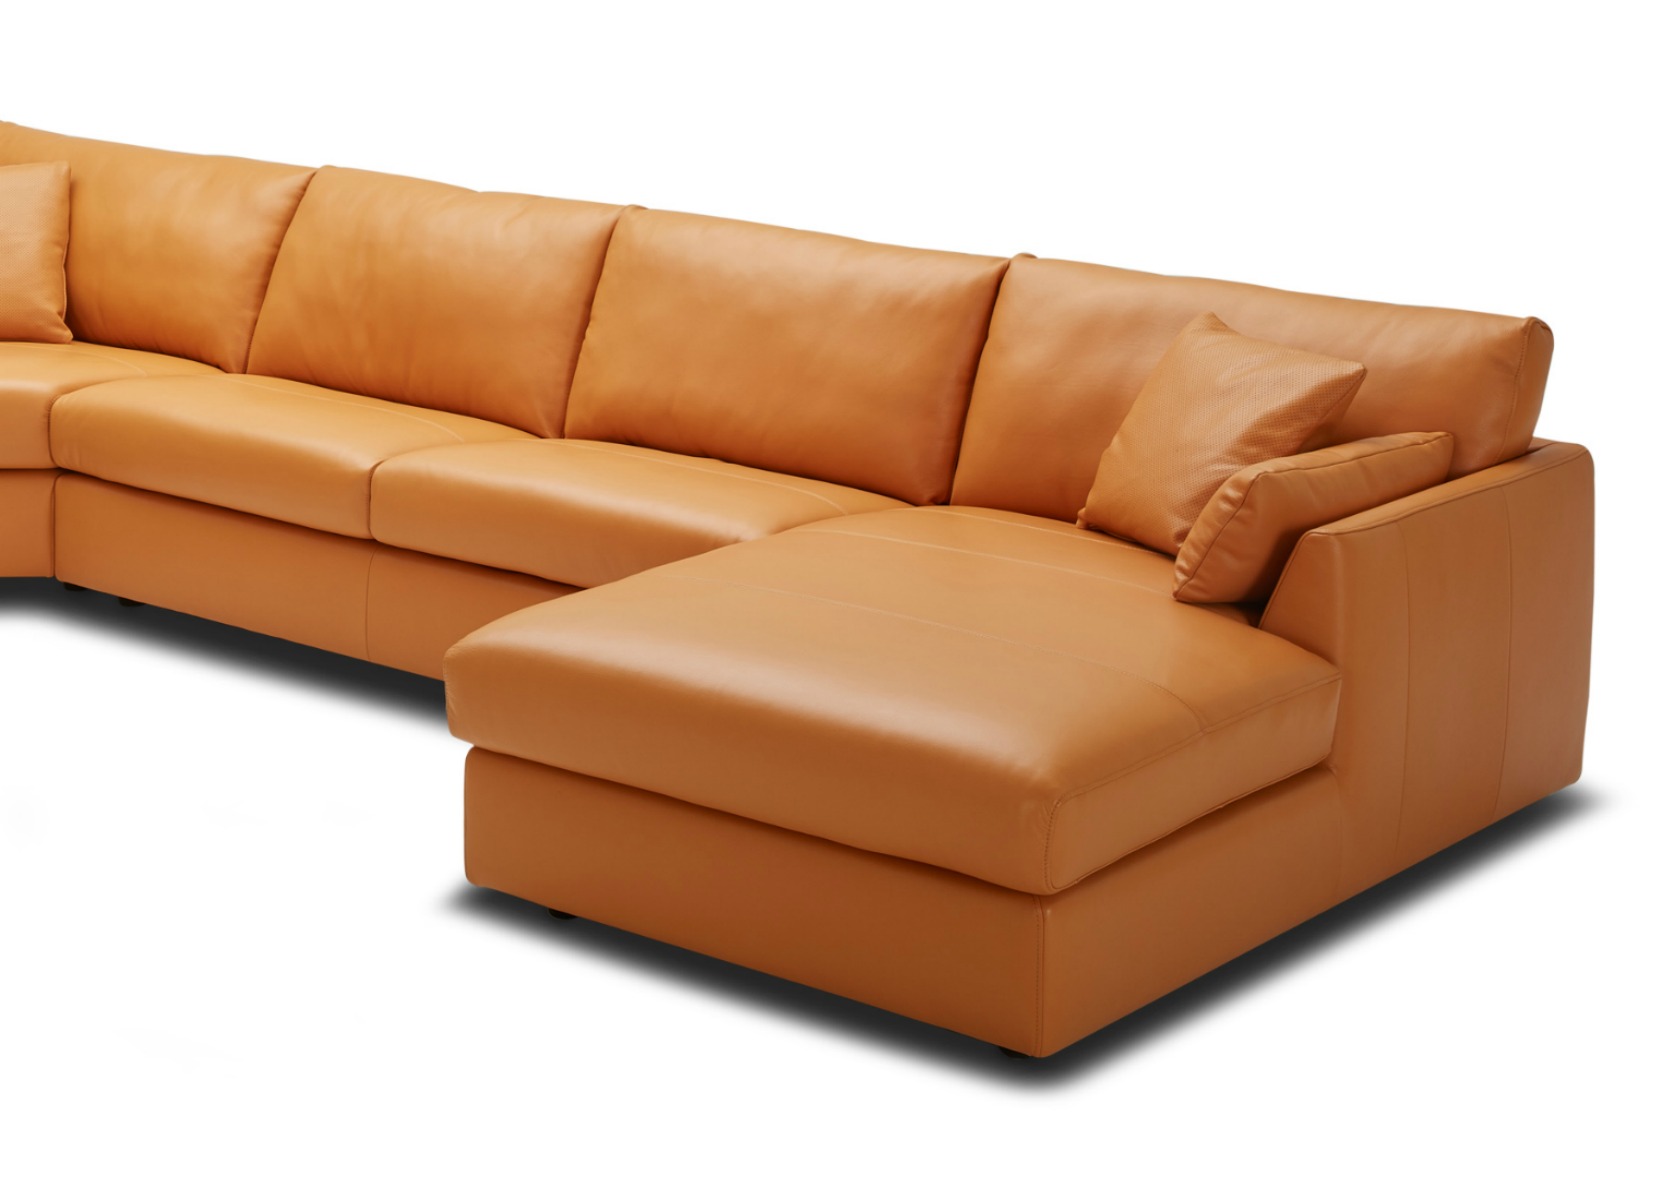 tan leather sofa restorer